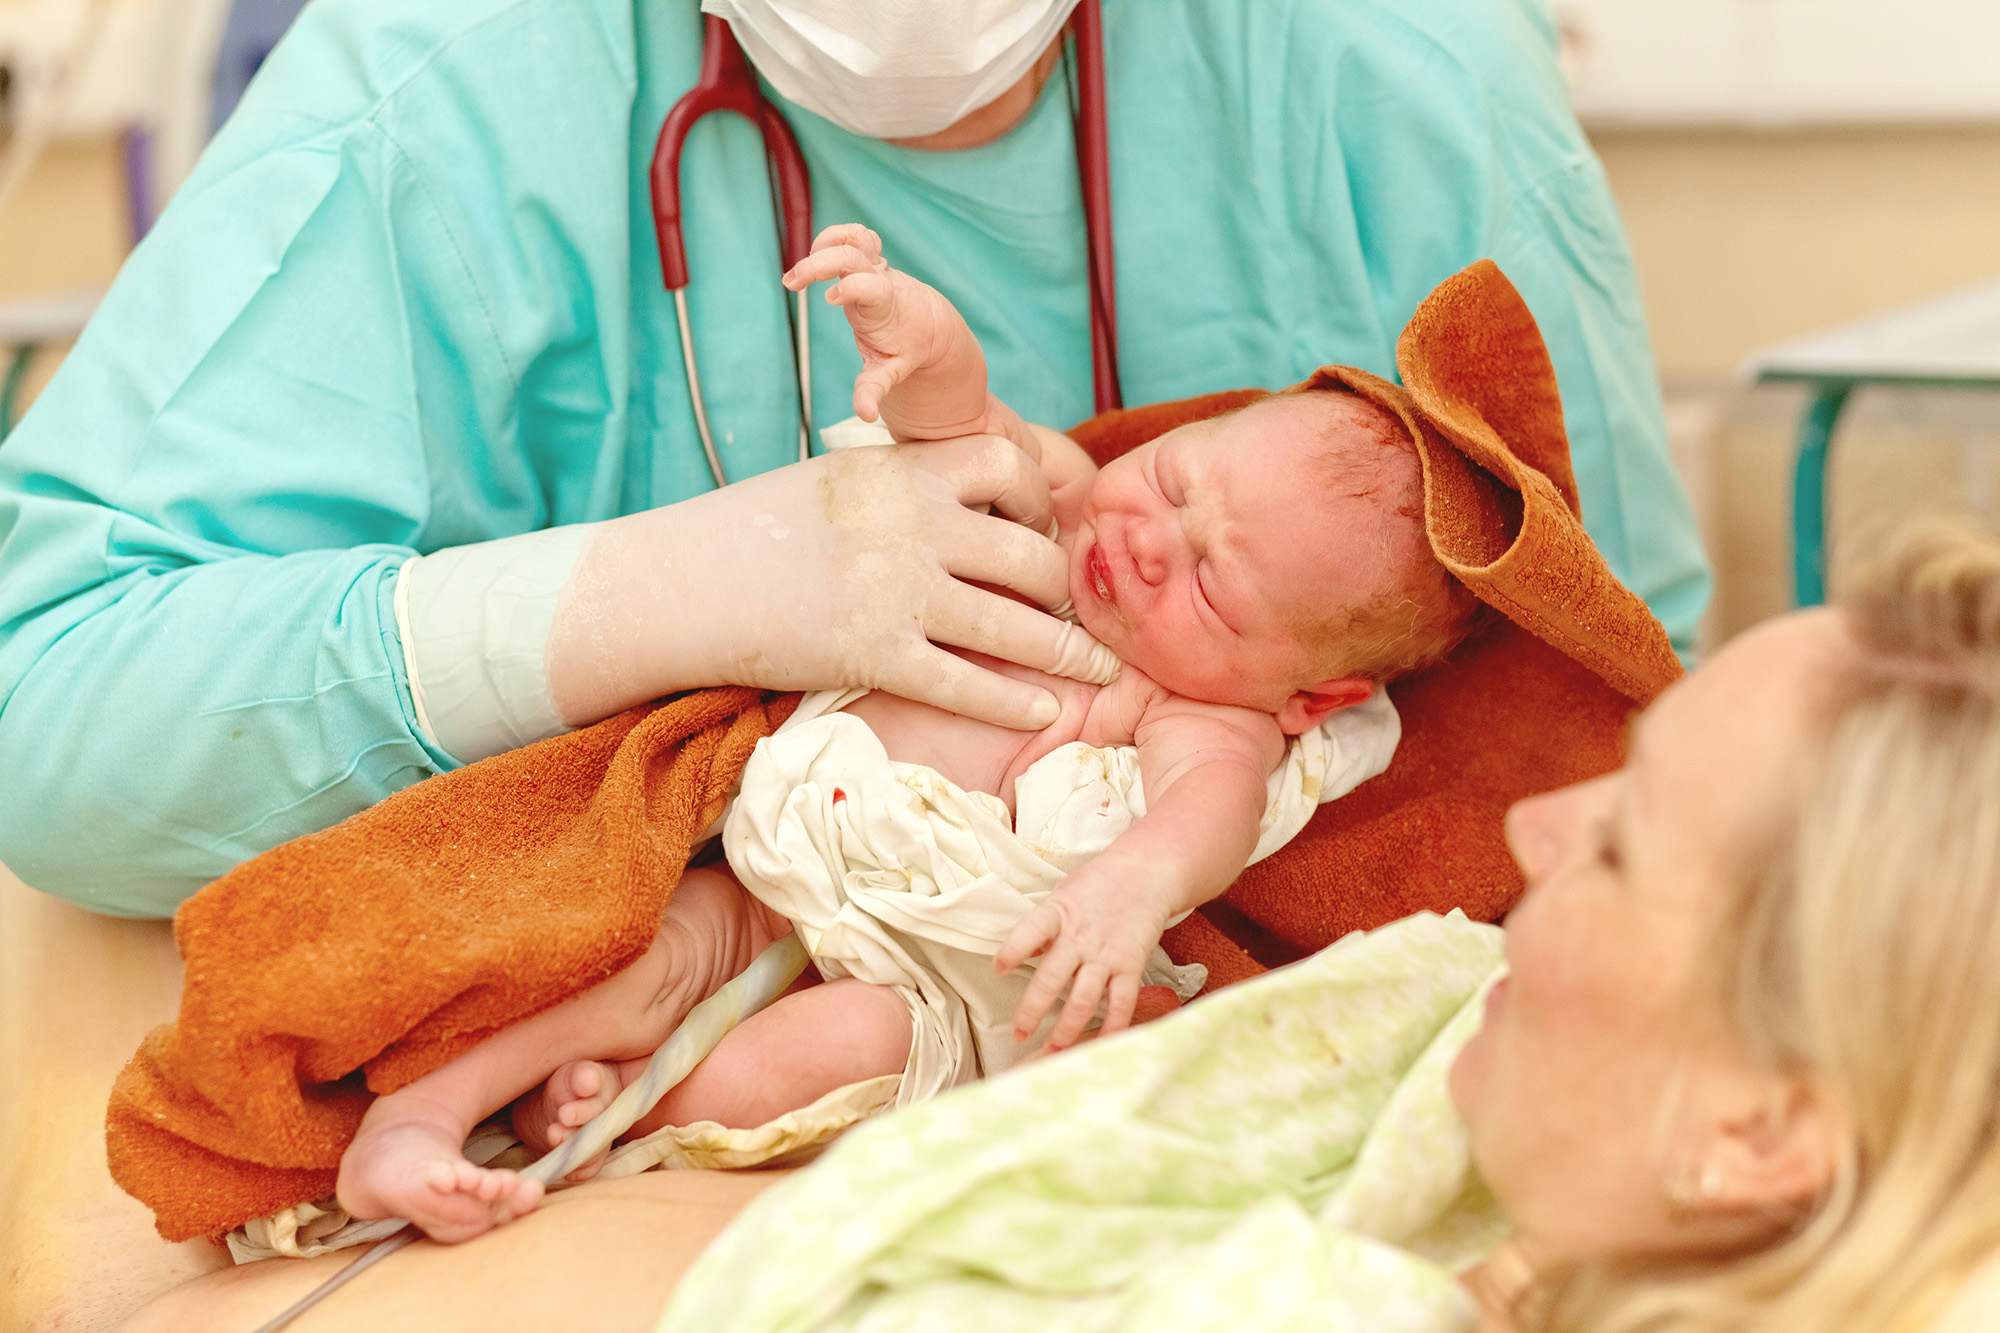 Birth first. Процесс рождения ребенка в роддоме.